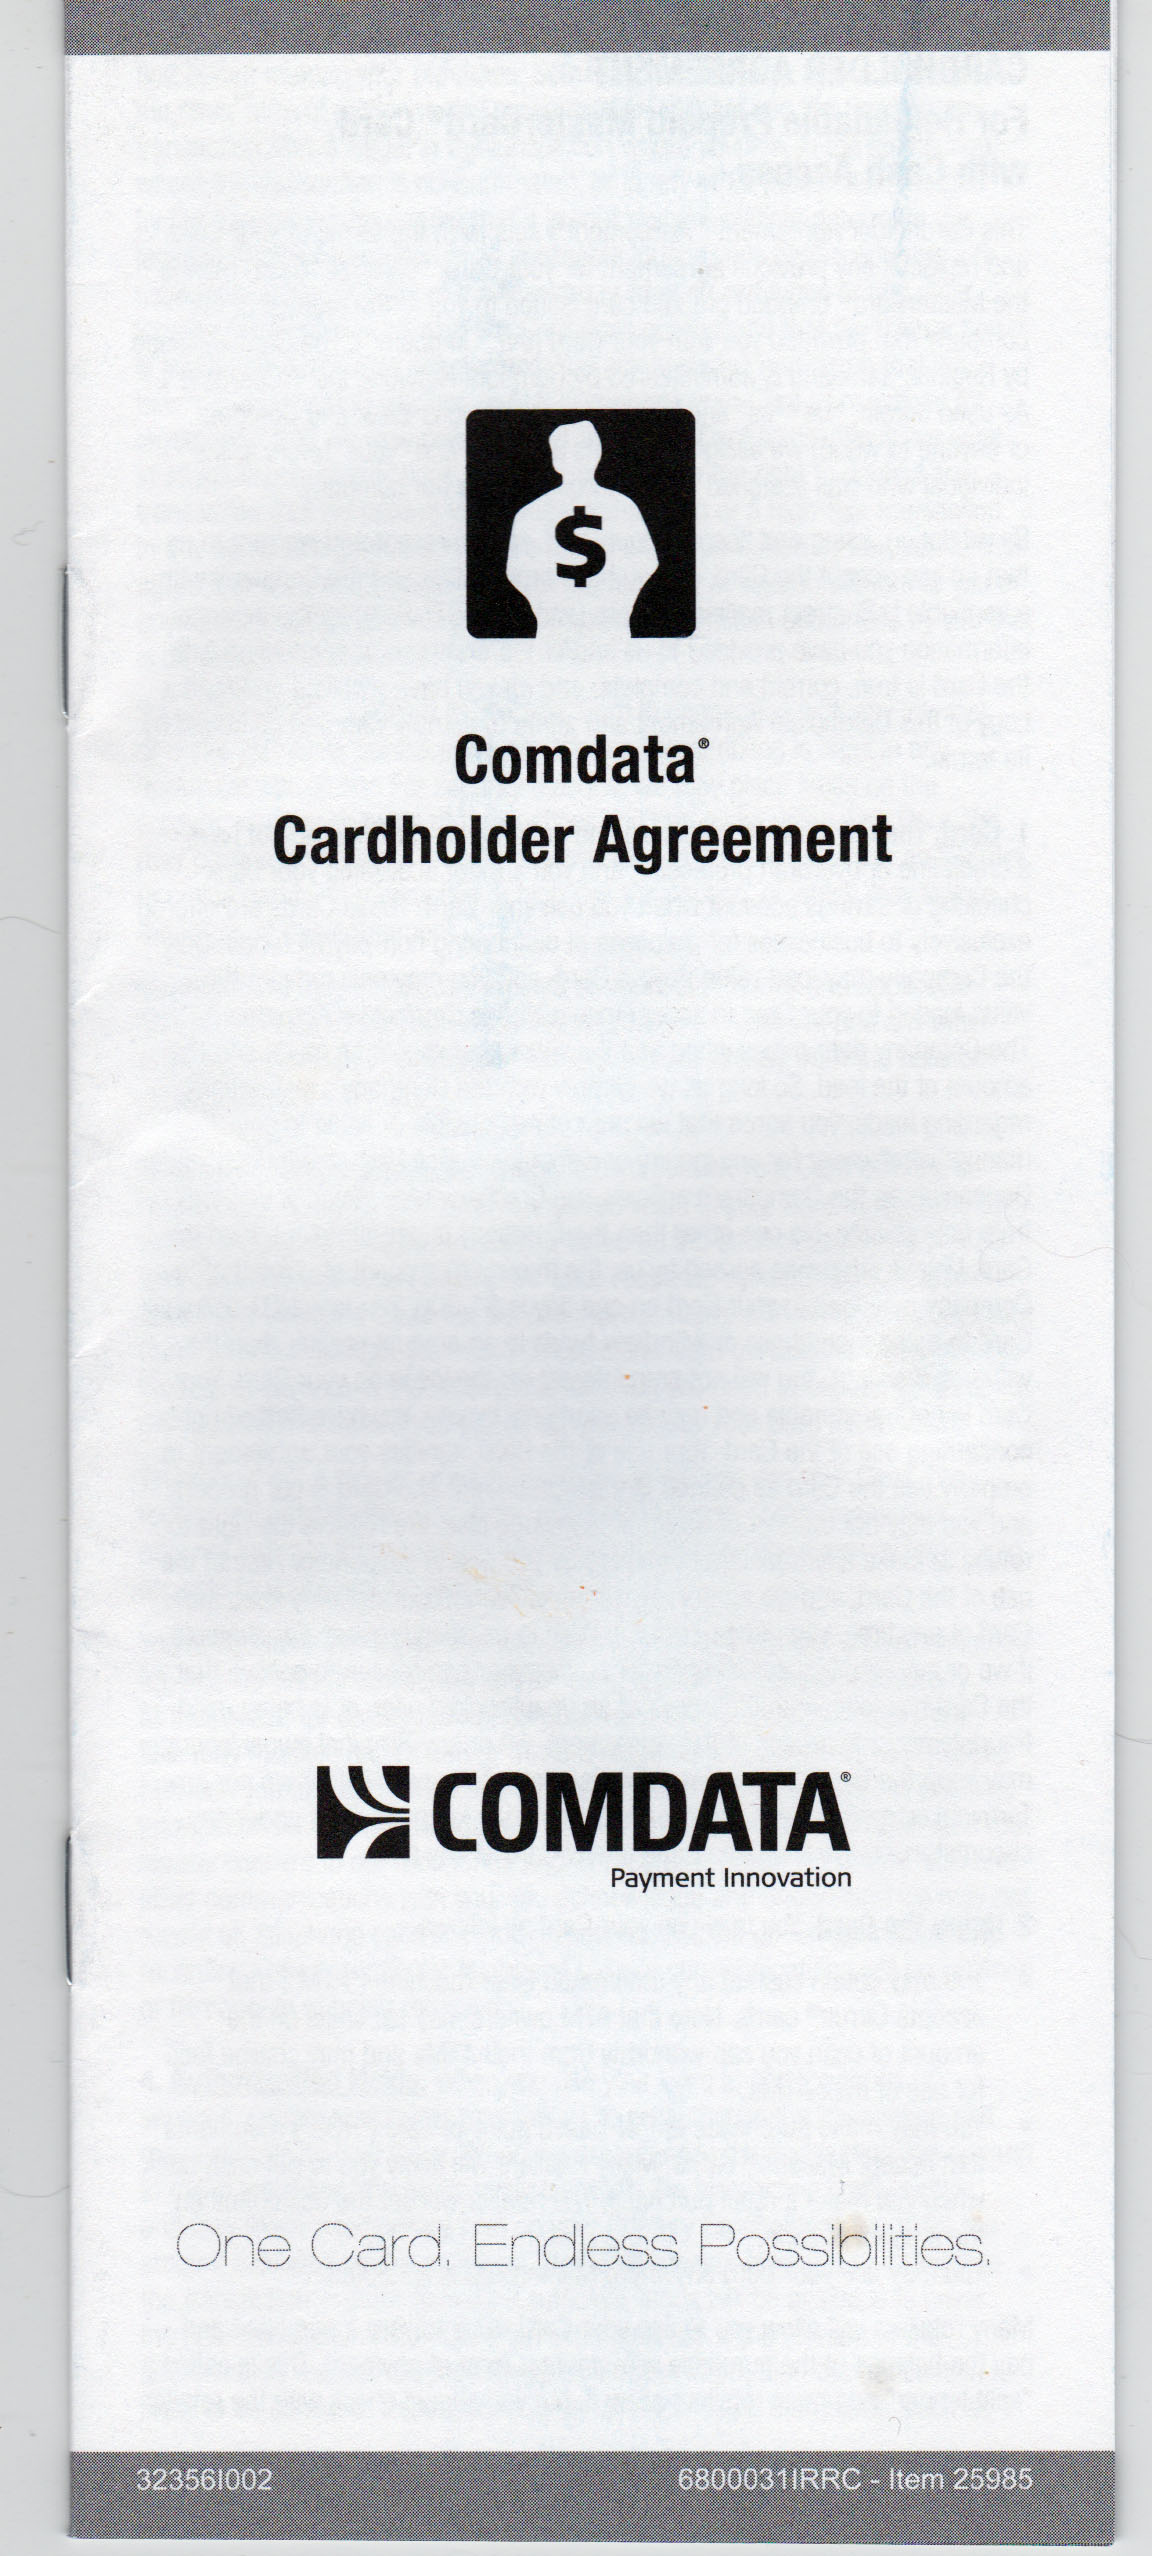 Cardholder Agreement